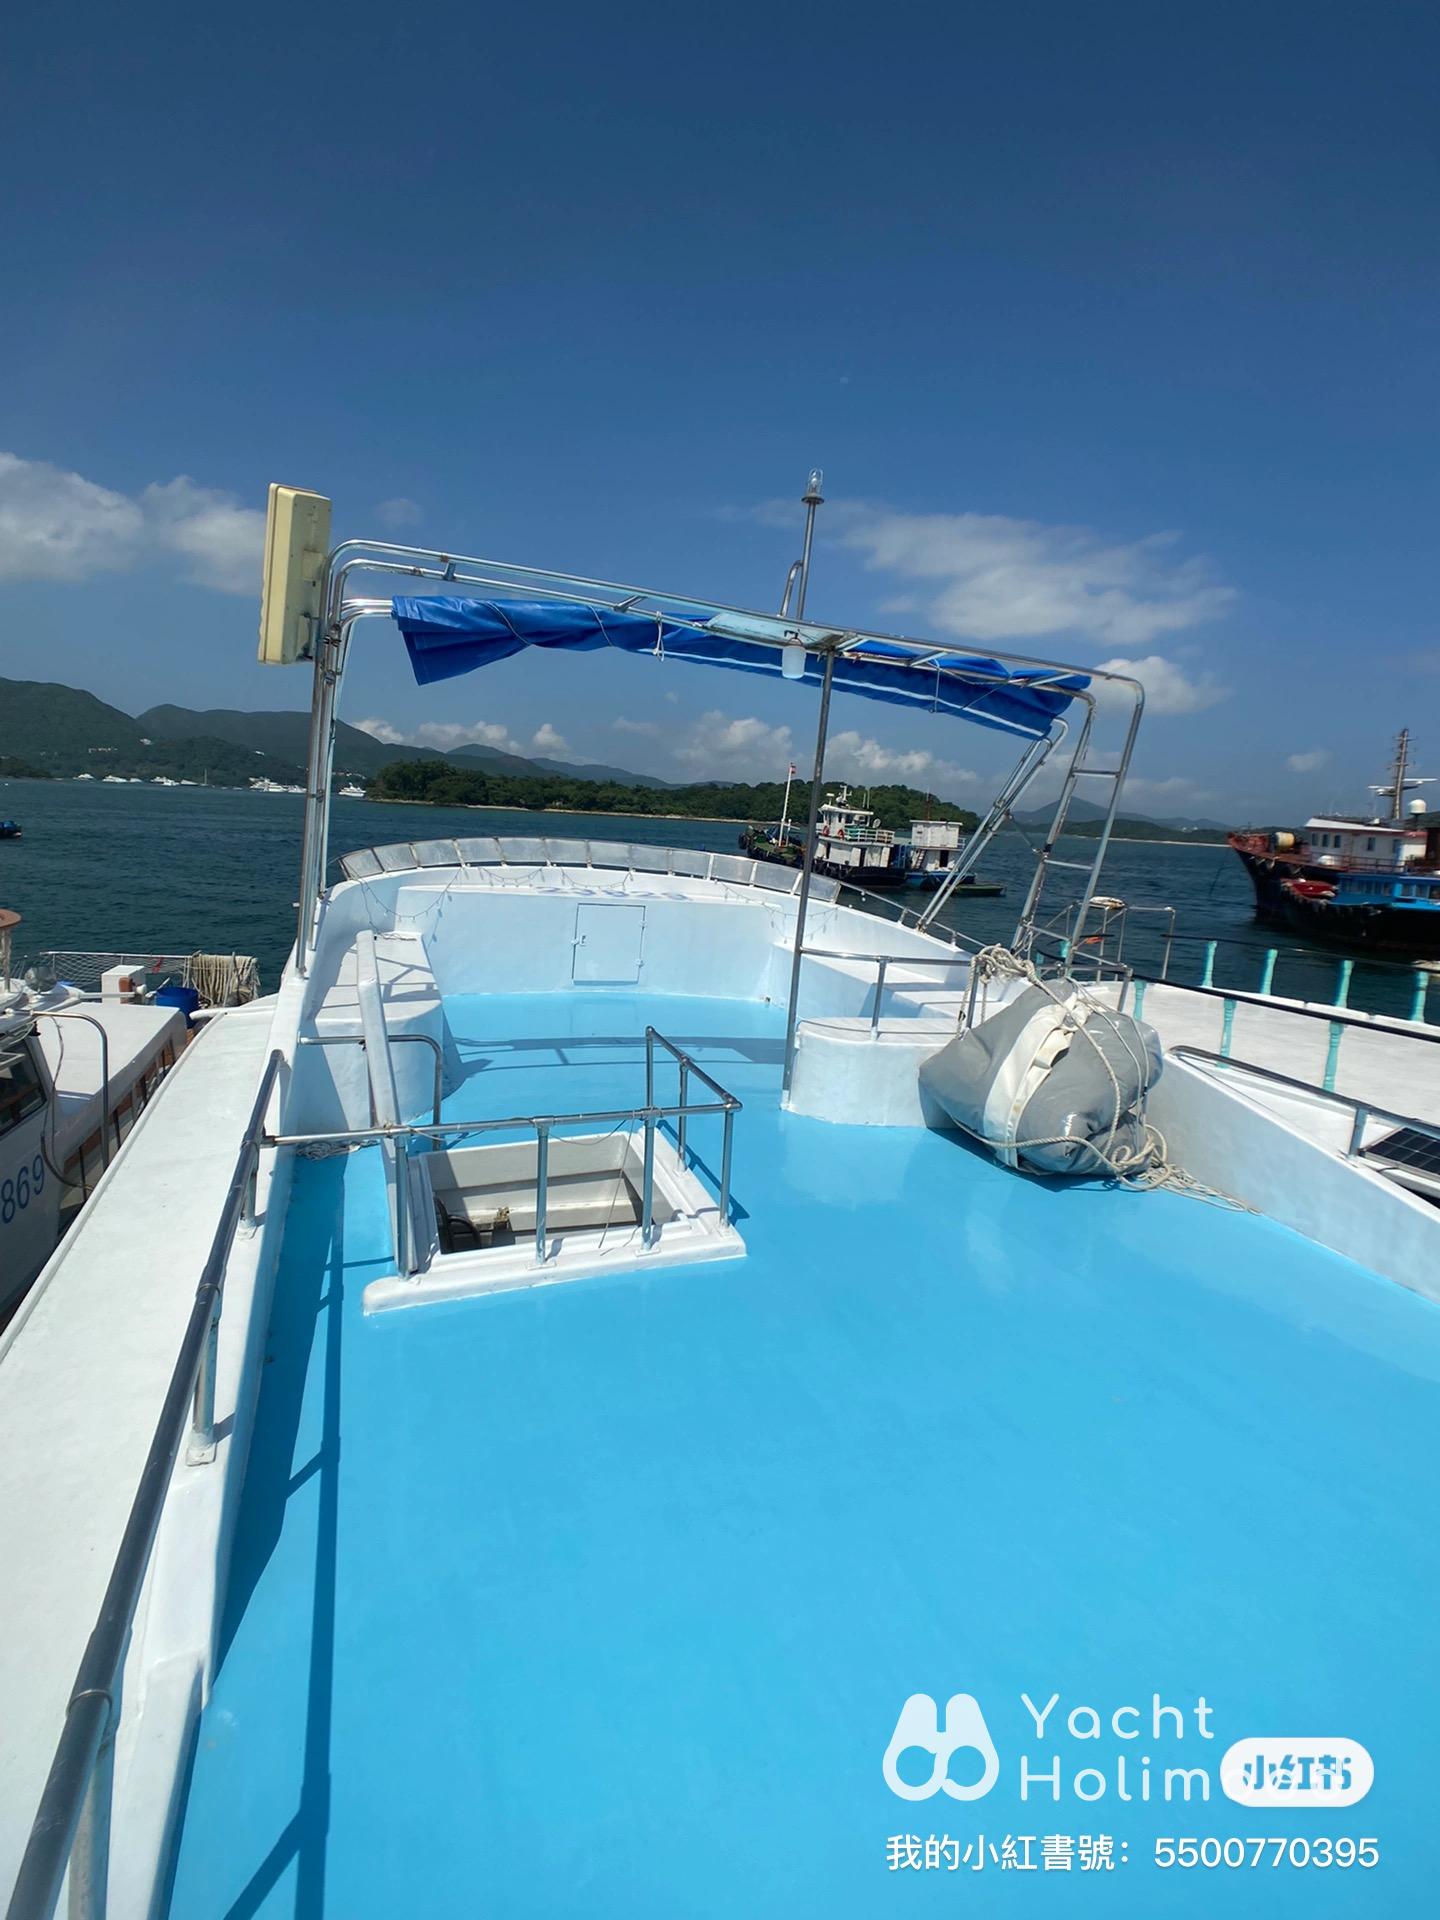 CL01 Sai Kung Day Charter Junk Boat (Inc. Speedboat, floaties & pet friendly boat) 2